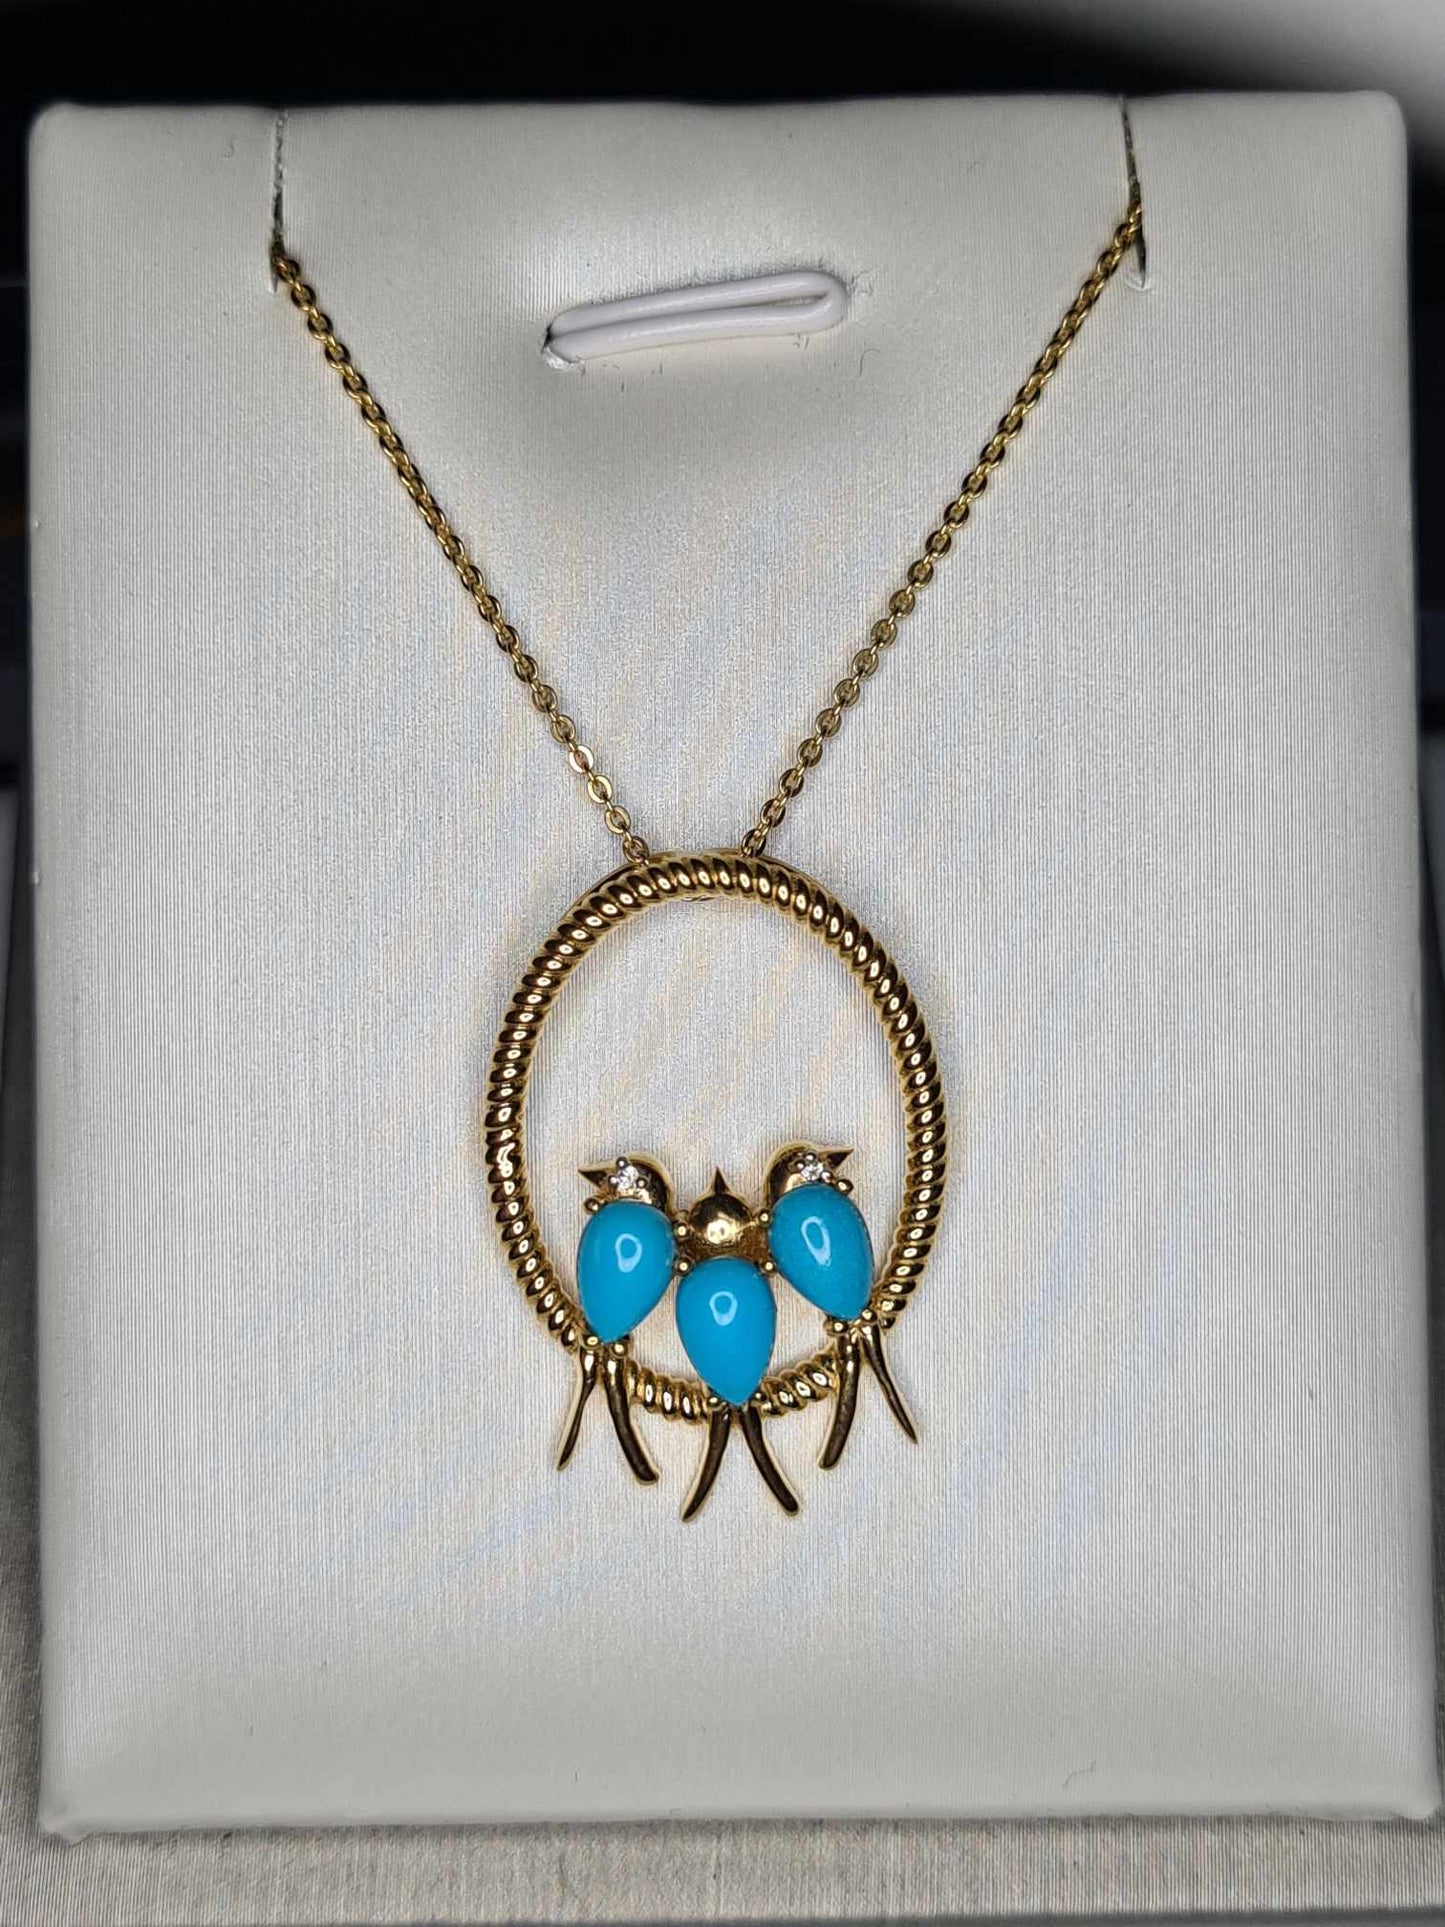 1.23 Ct Bird Arizona Sleeping Beauty Turquoise &amp; Zircon Necklace 18k gold overlay 925 sterling silver